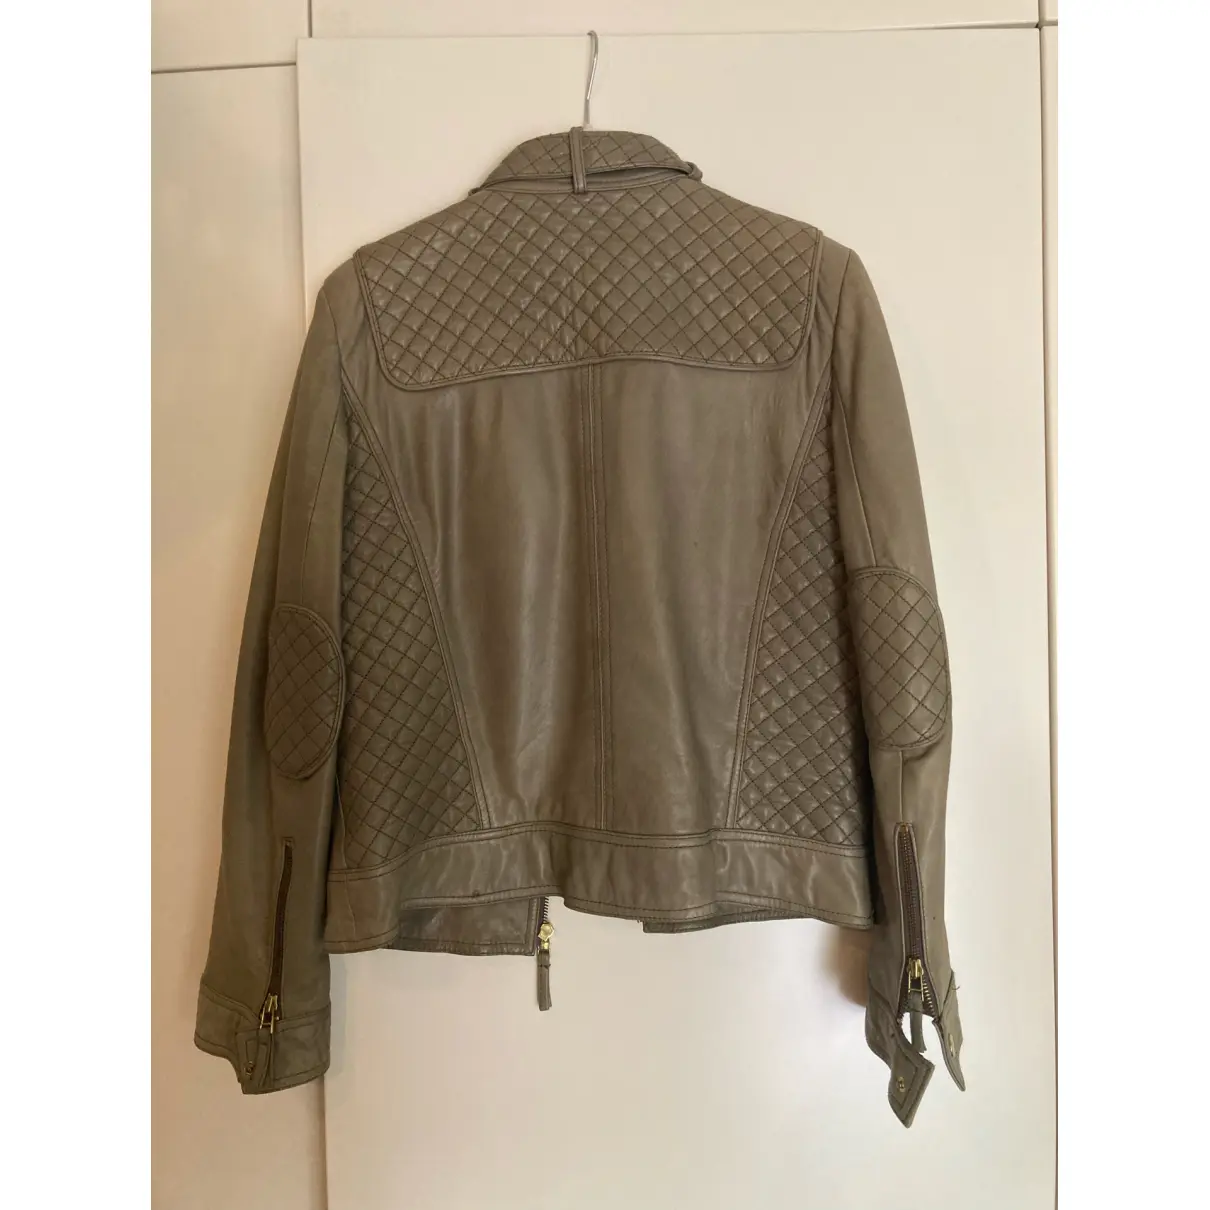 Buy Zara Leather biker jacket online